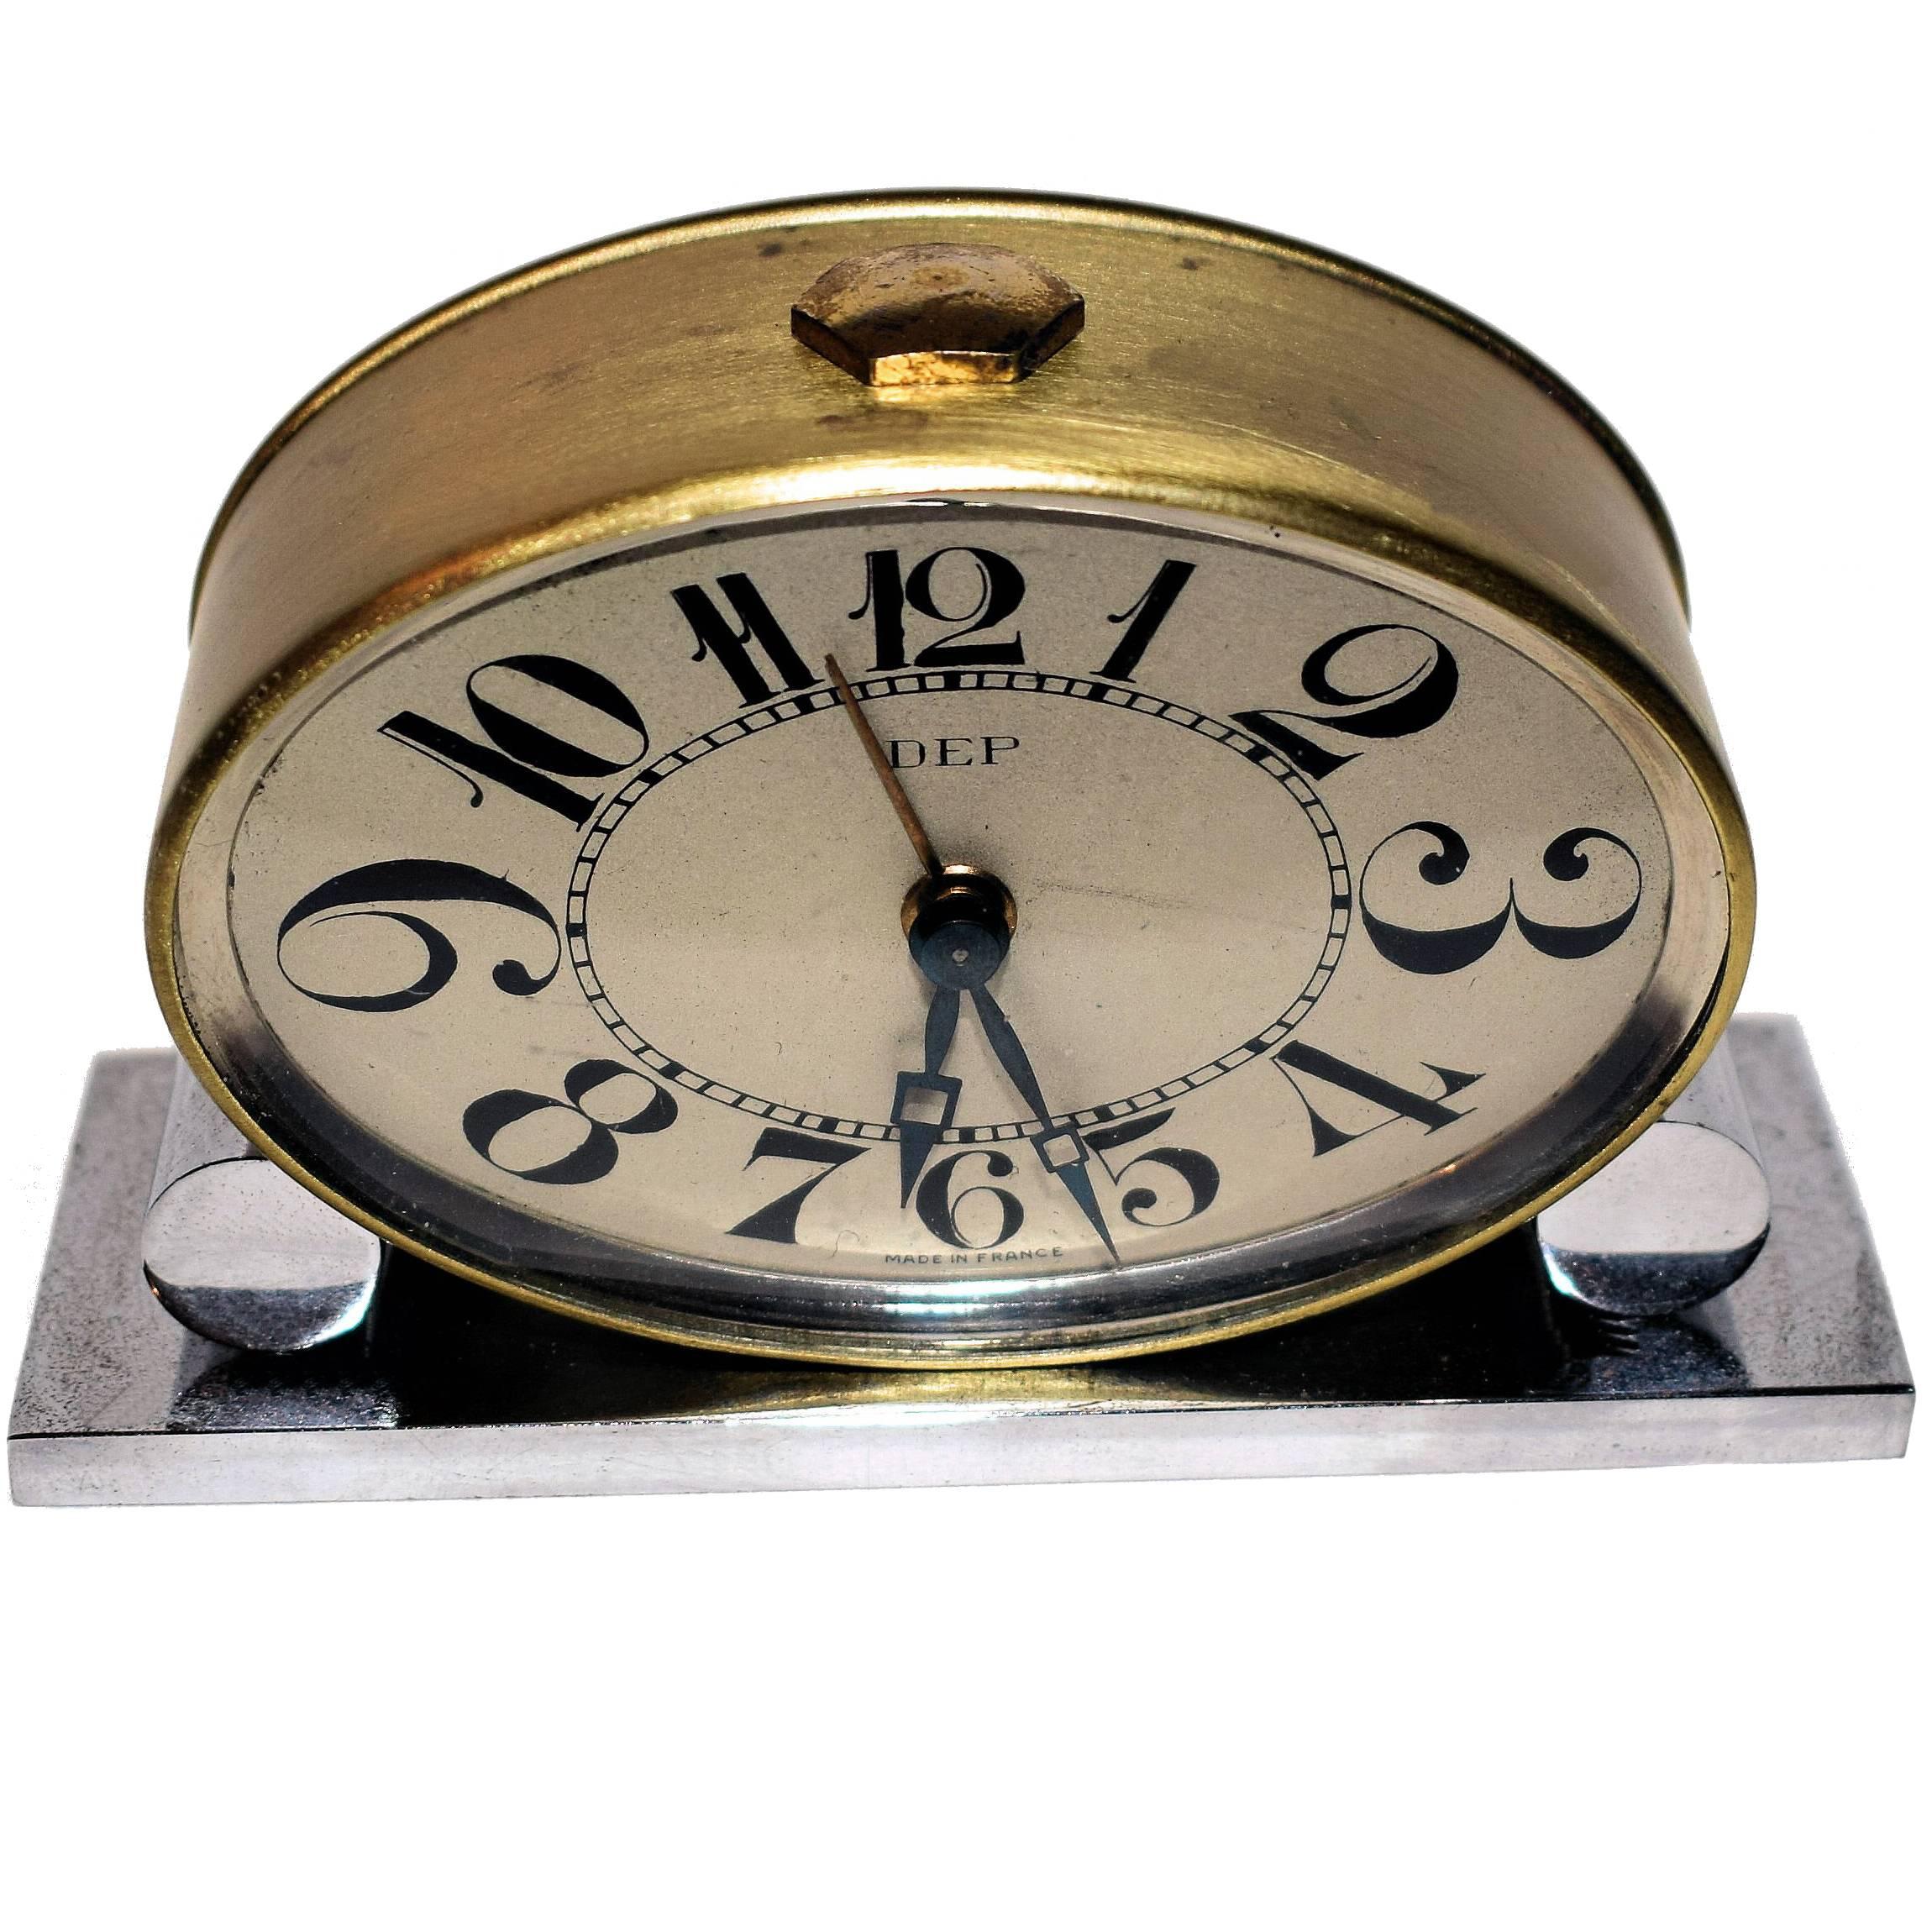 Original 1930s Art Deco Miniature Clock by Dep